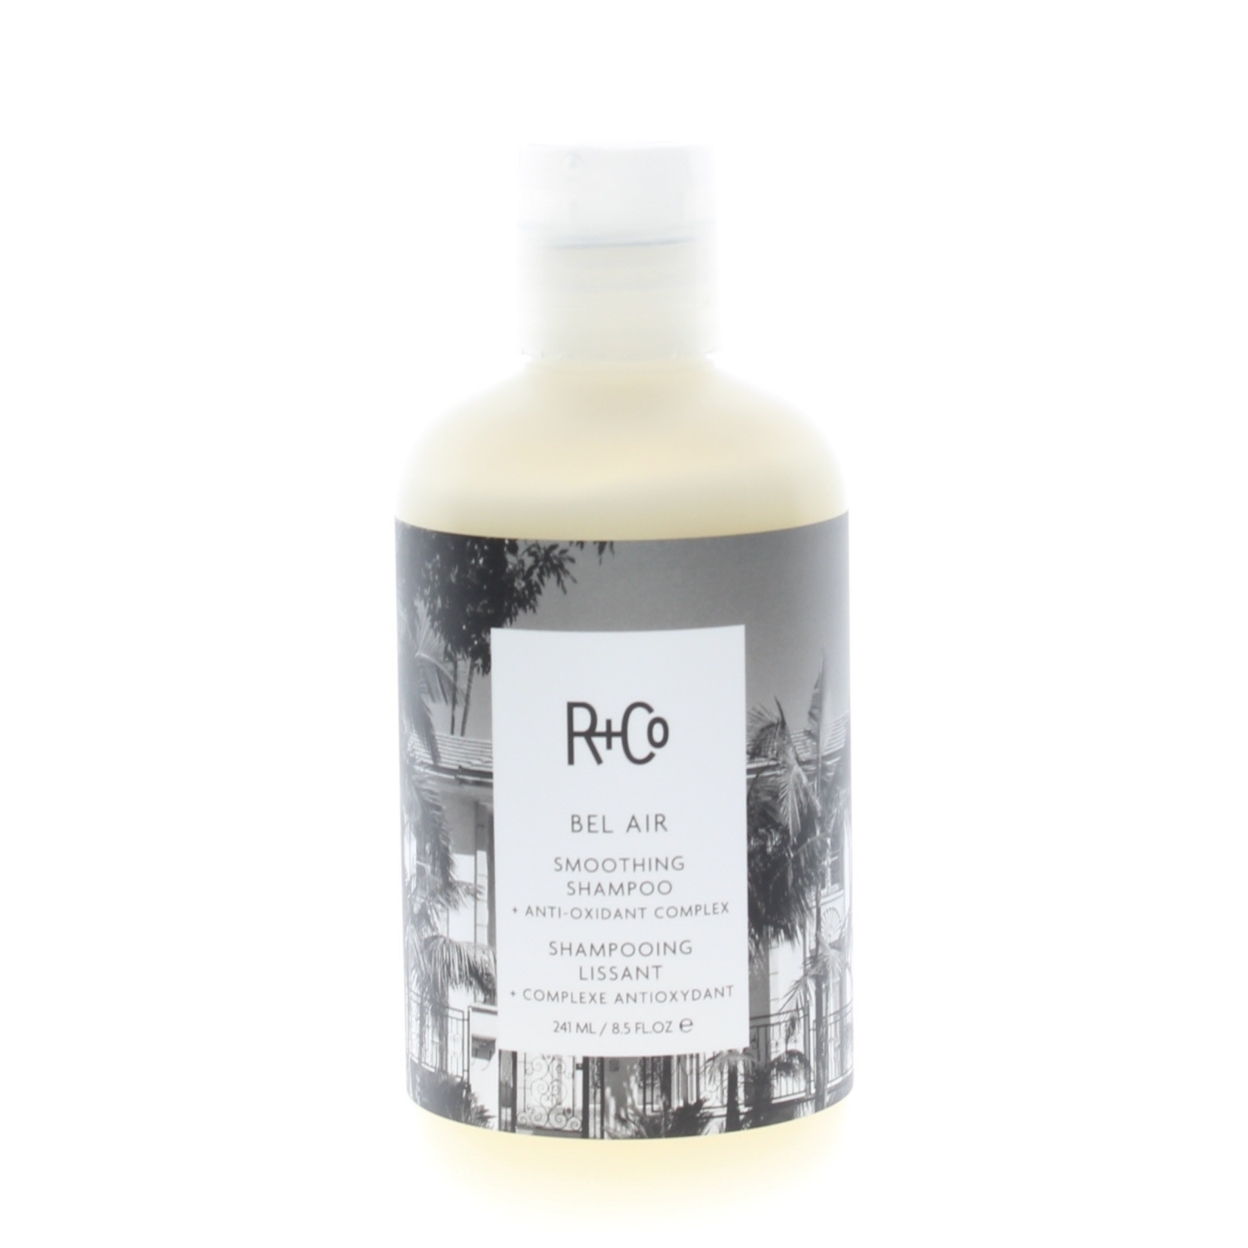 R+Co Bel Air Smoothing Shampoo+ Anti-Oxidant Complex 8.5oz/241ml